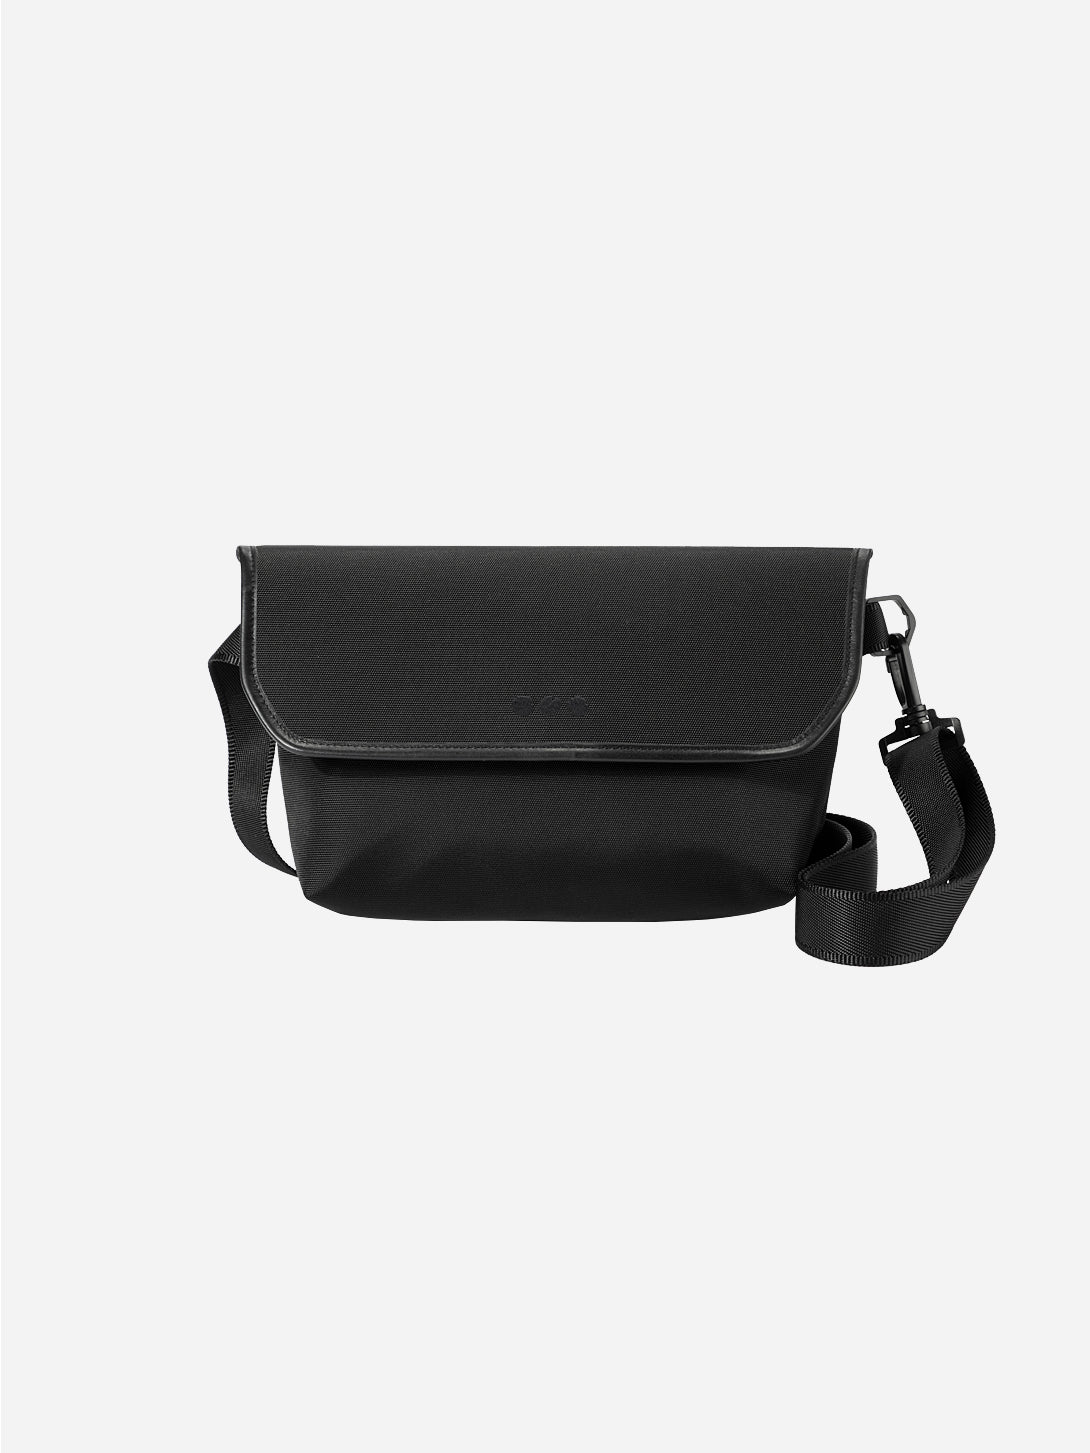 Black All-Things Mini Messenger ONS Clothing Crossbody Waistband Fanny Bag Contemporary Sleek Minimal Functional